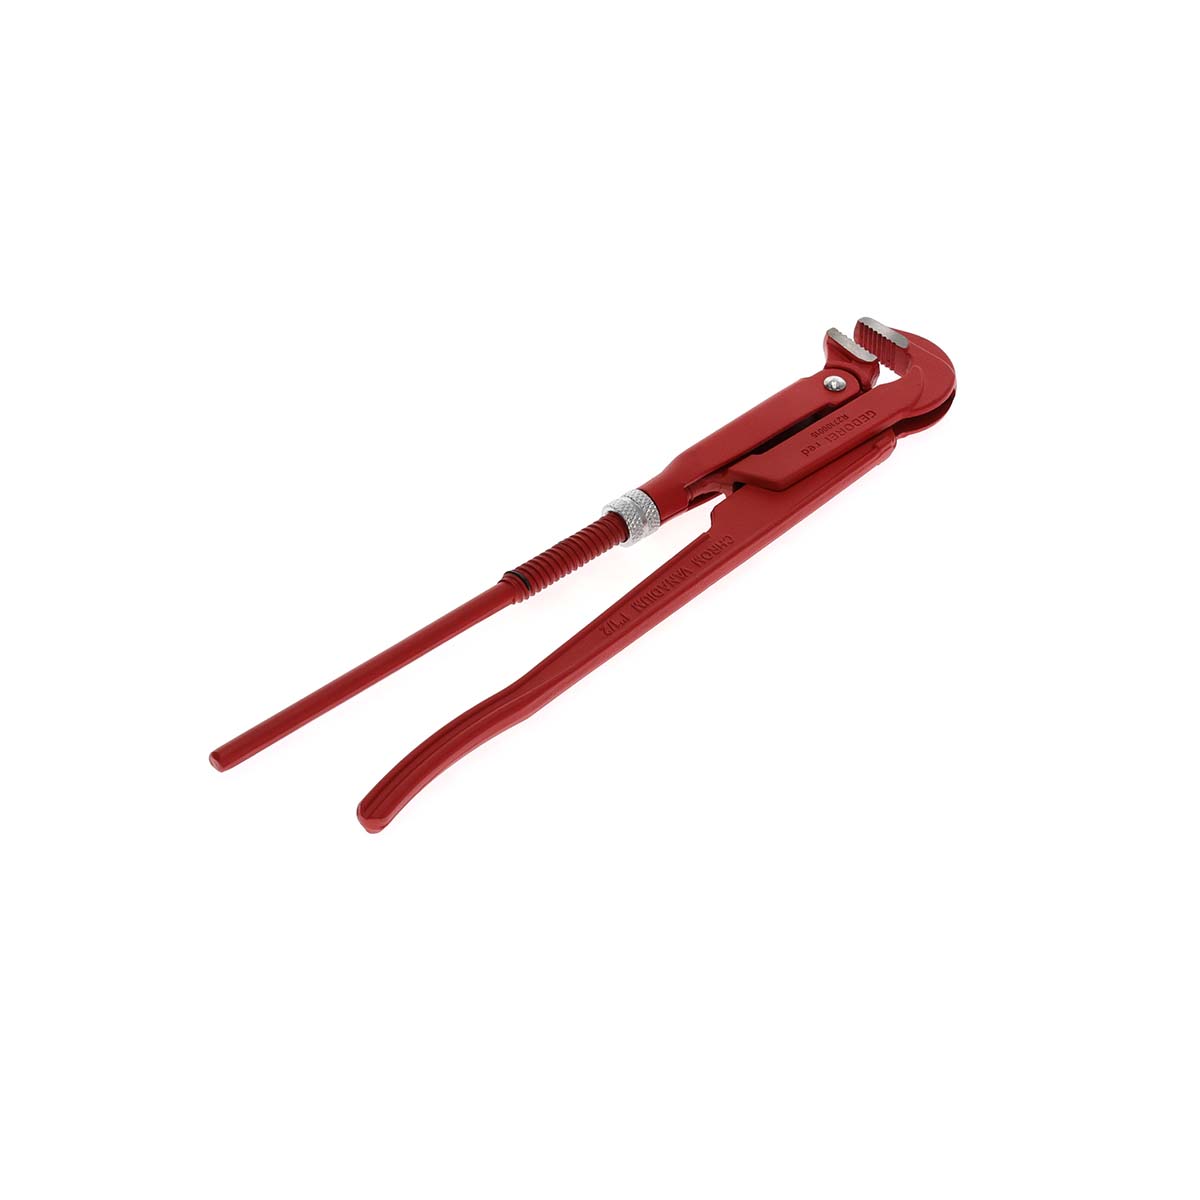 GEDORE red R27100015 - Tenaza para tubos con boca a 90°, 425mm (3301158)